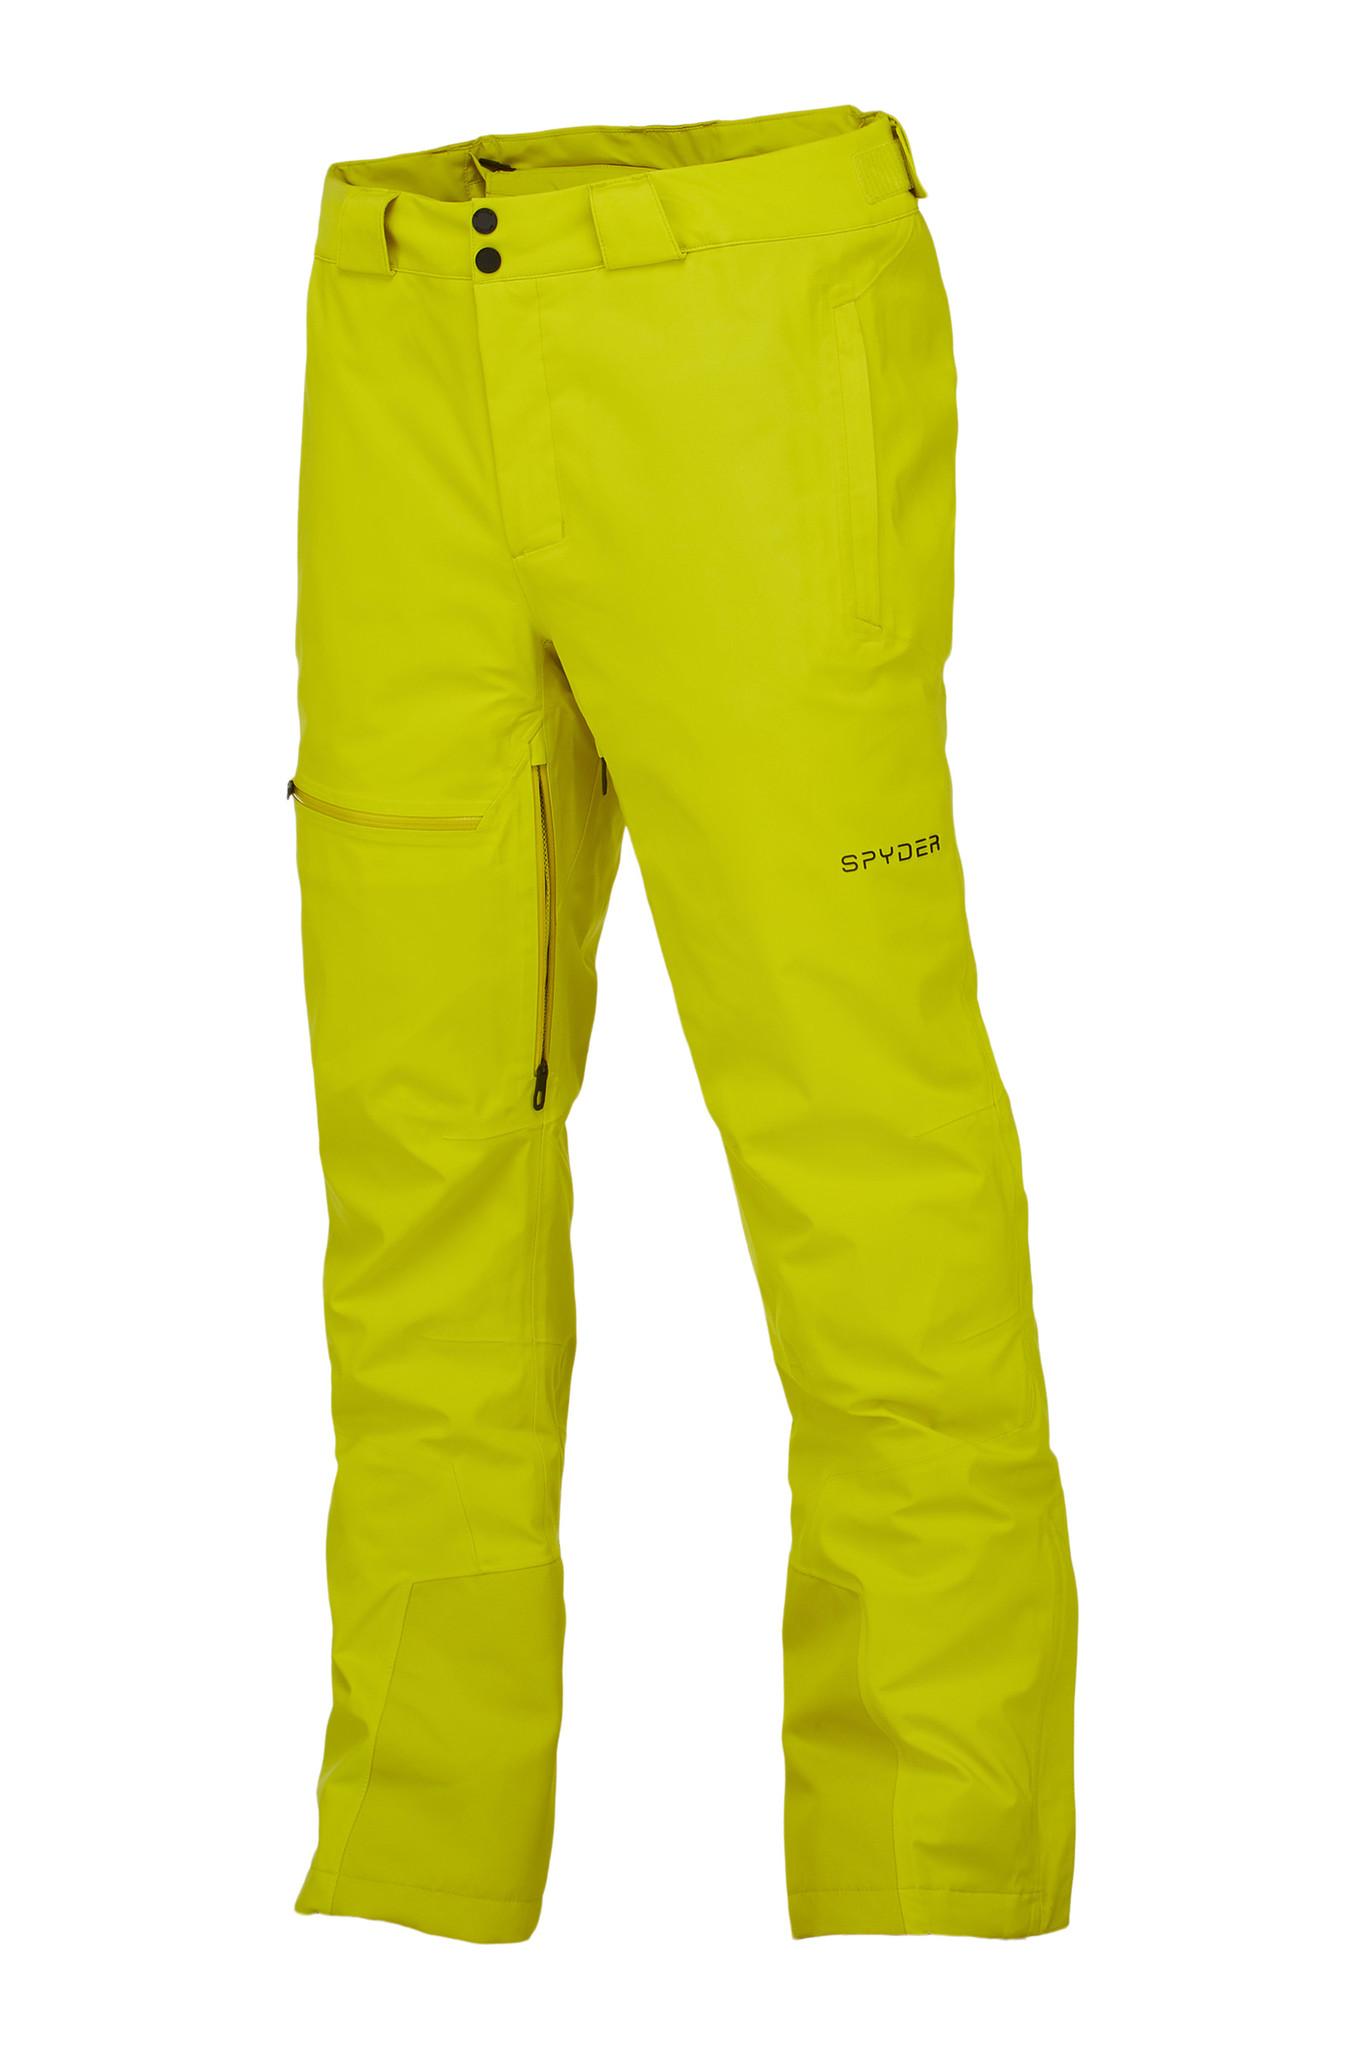 Spyder, Dare ski pants men citron yellow